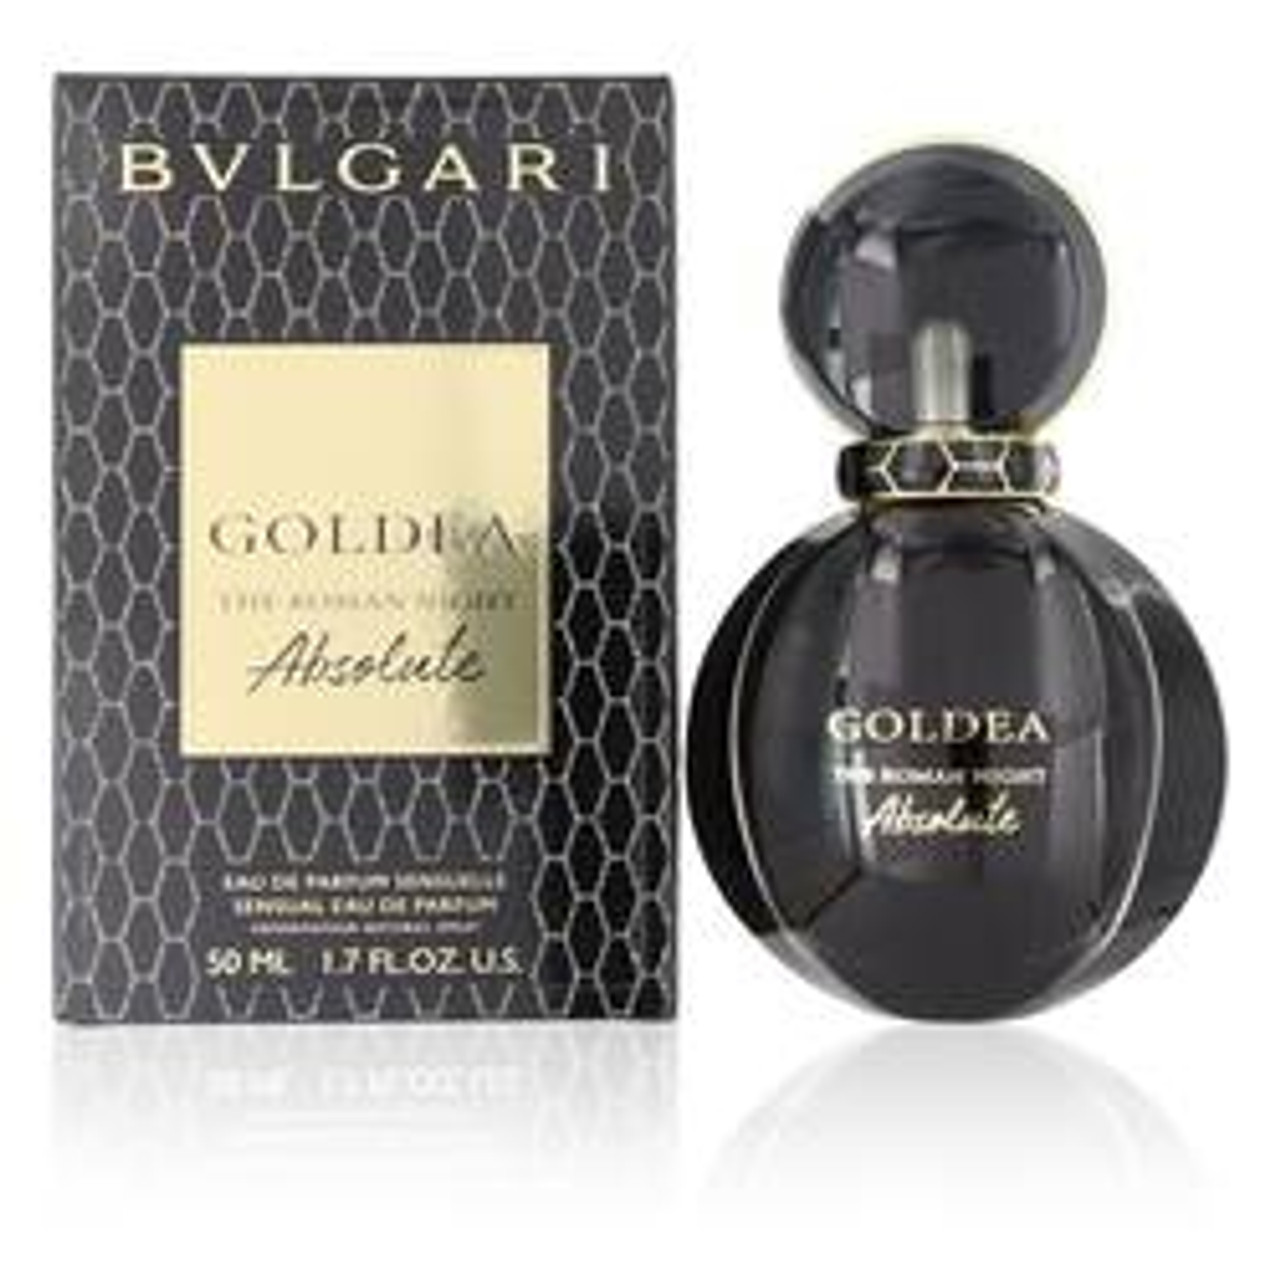 Bvlgari Goldea The Roman Night Absolute Perfume By Bvlgari Eau De Parfum Spray 1.7 oz for Women - [From 116.00 - Choose pk Qty ] - *Ships from Miami